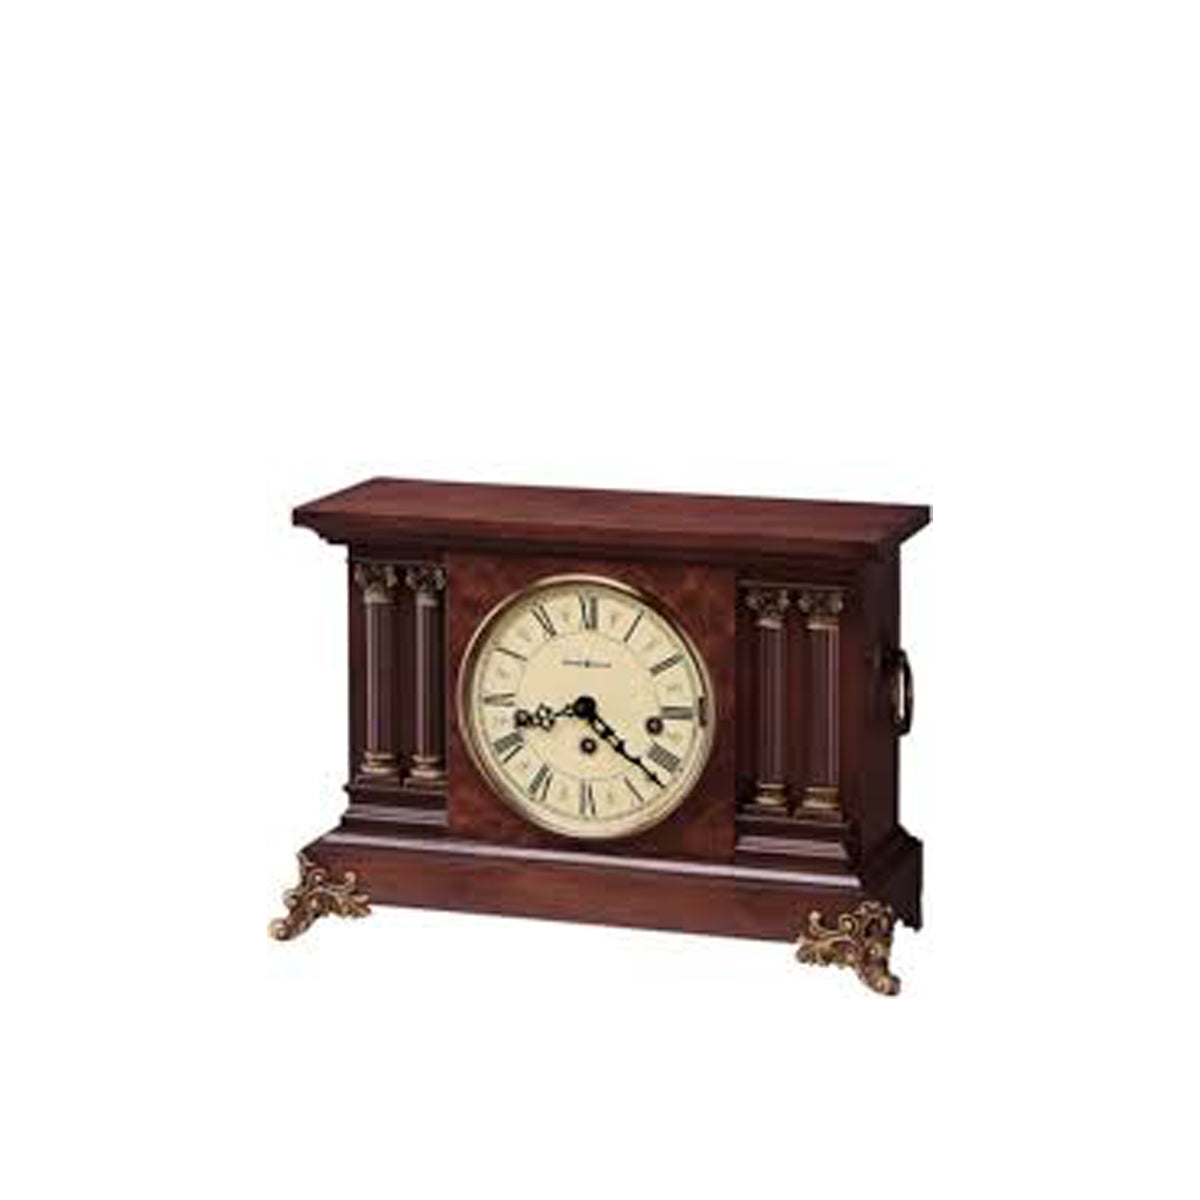 630-150 Hampton mantel clock by Howard Miller - Big Ben Clock Gallery